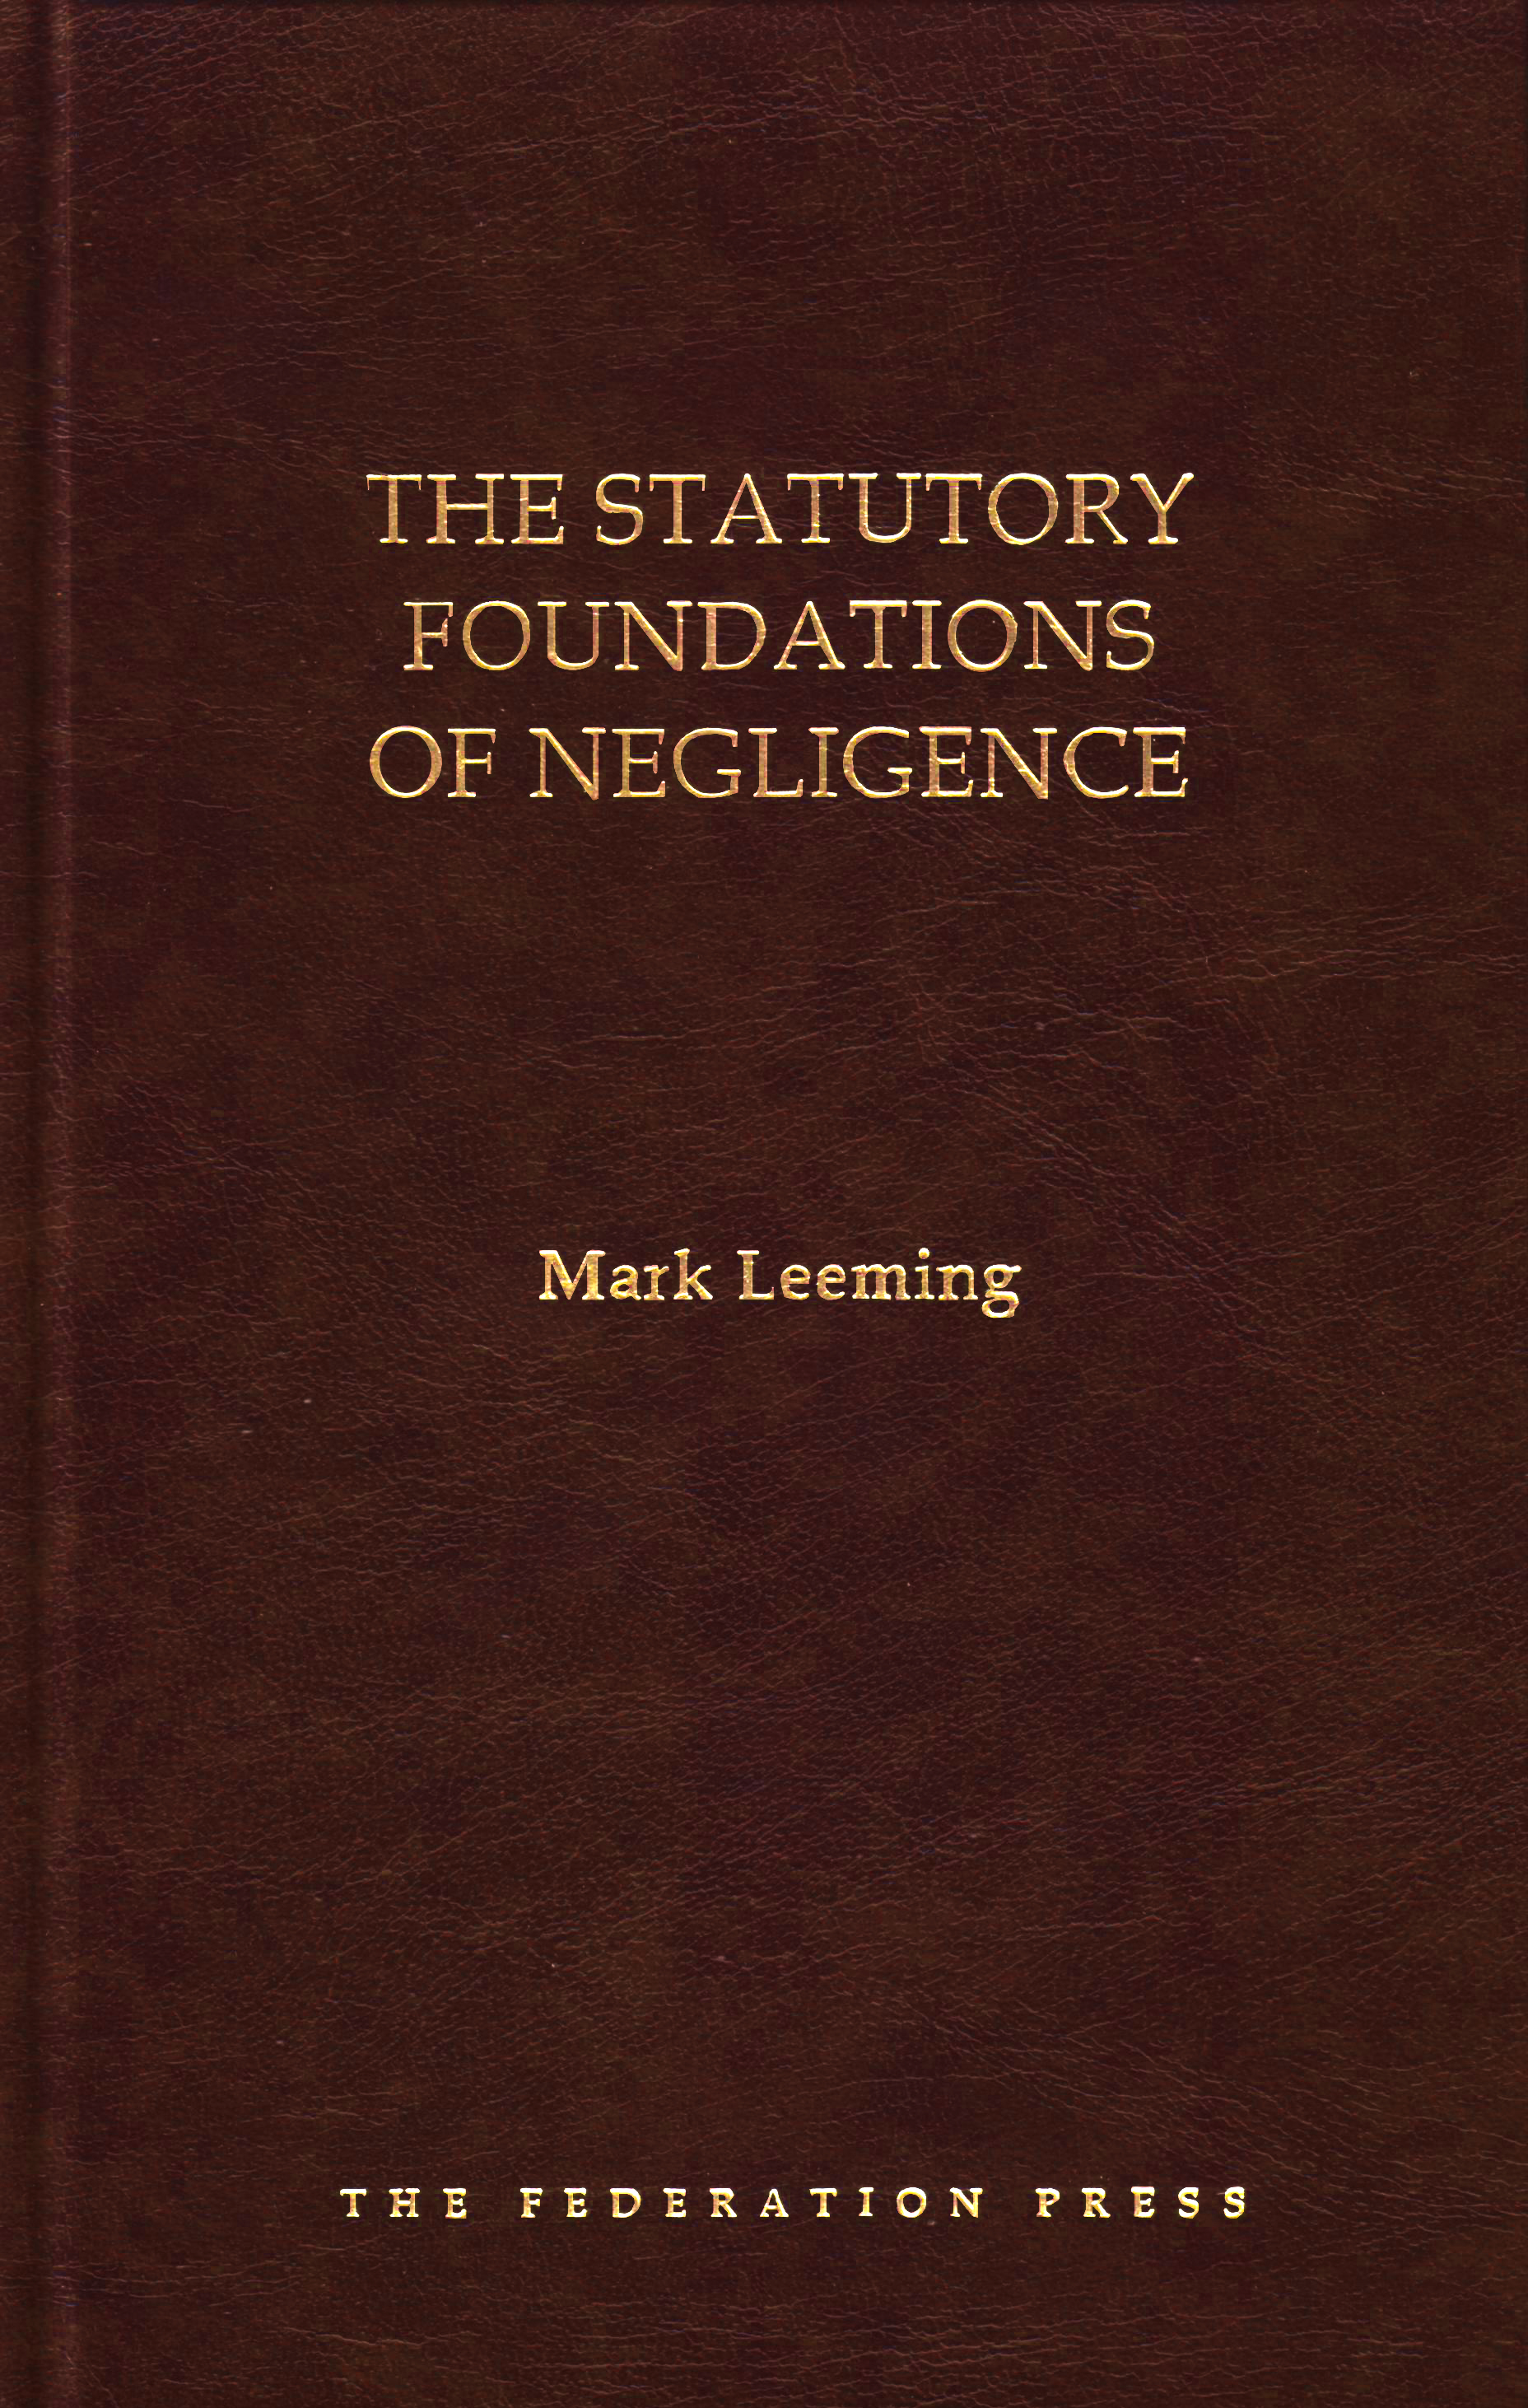 The Statutory Foundations of Negligence